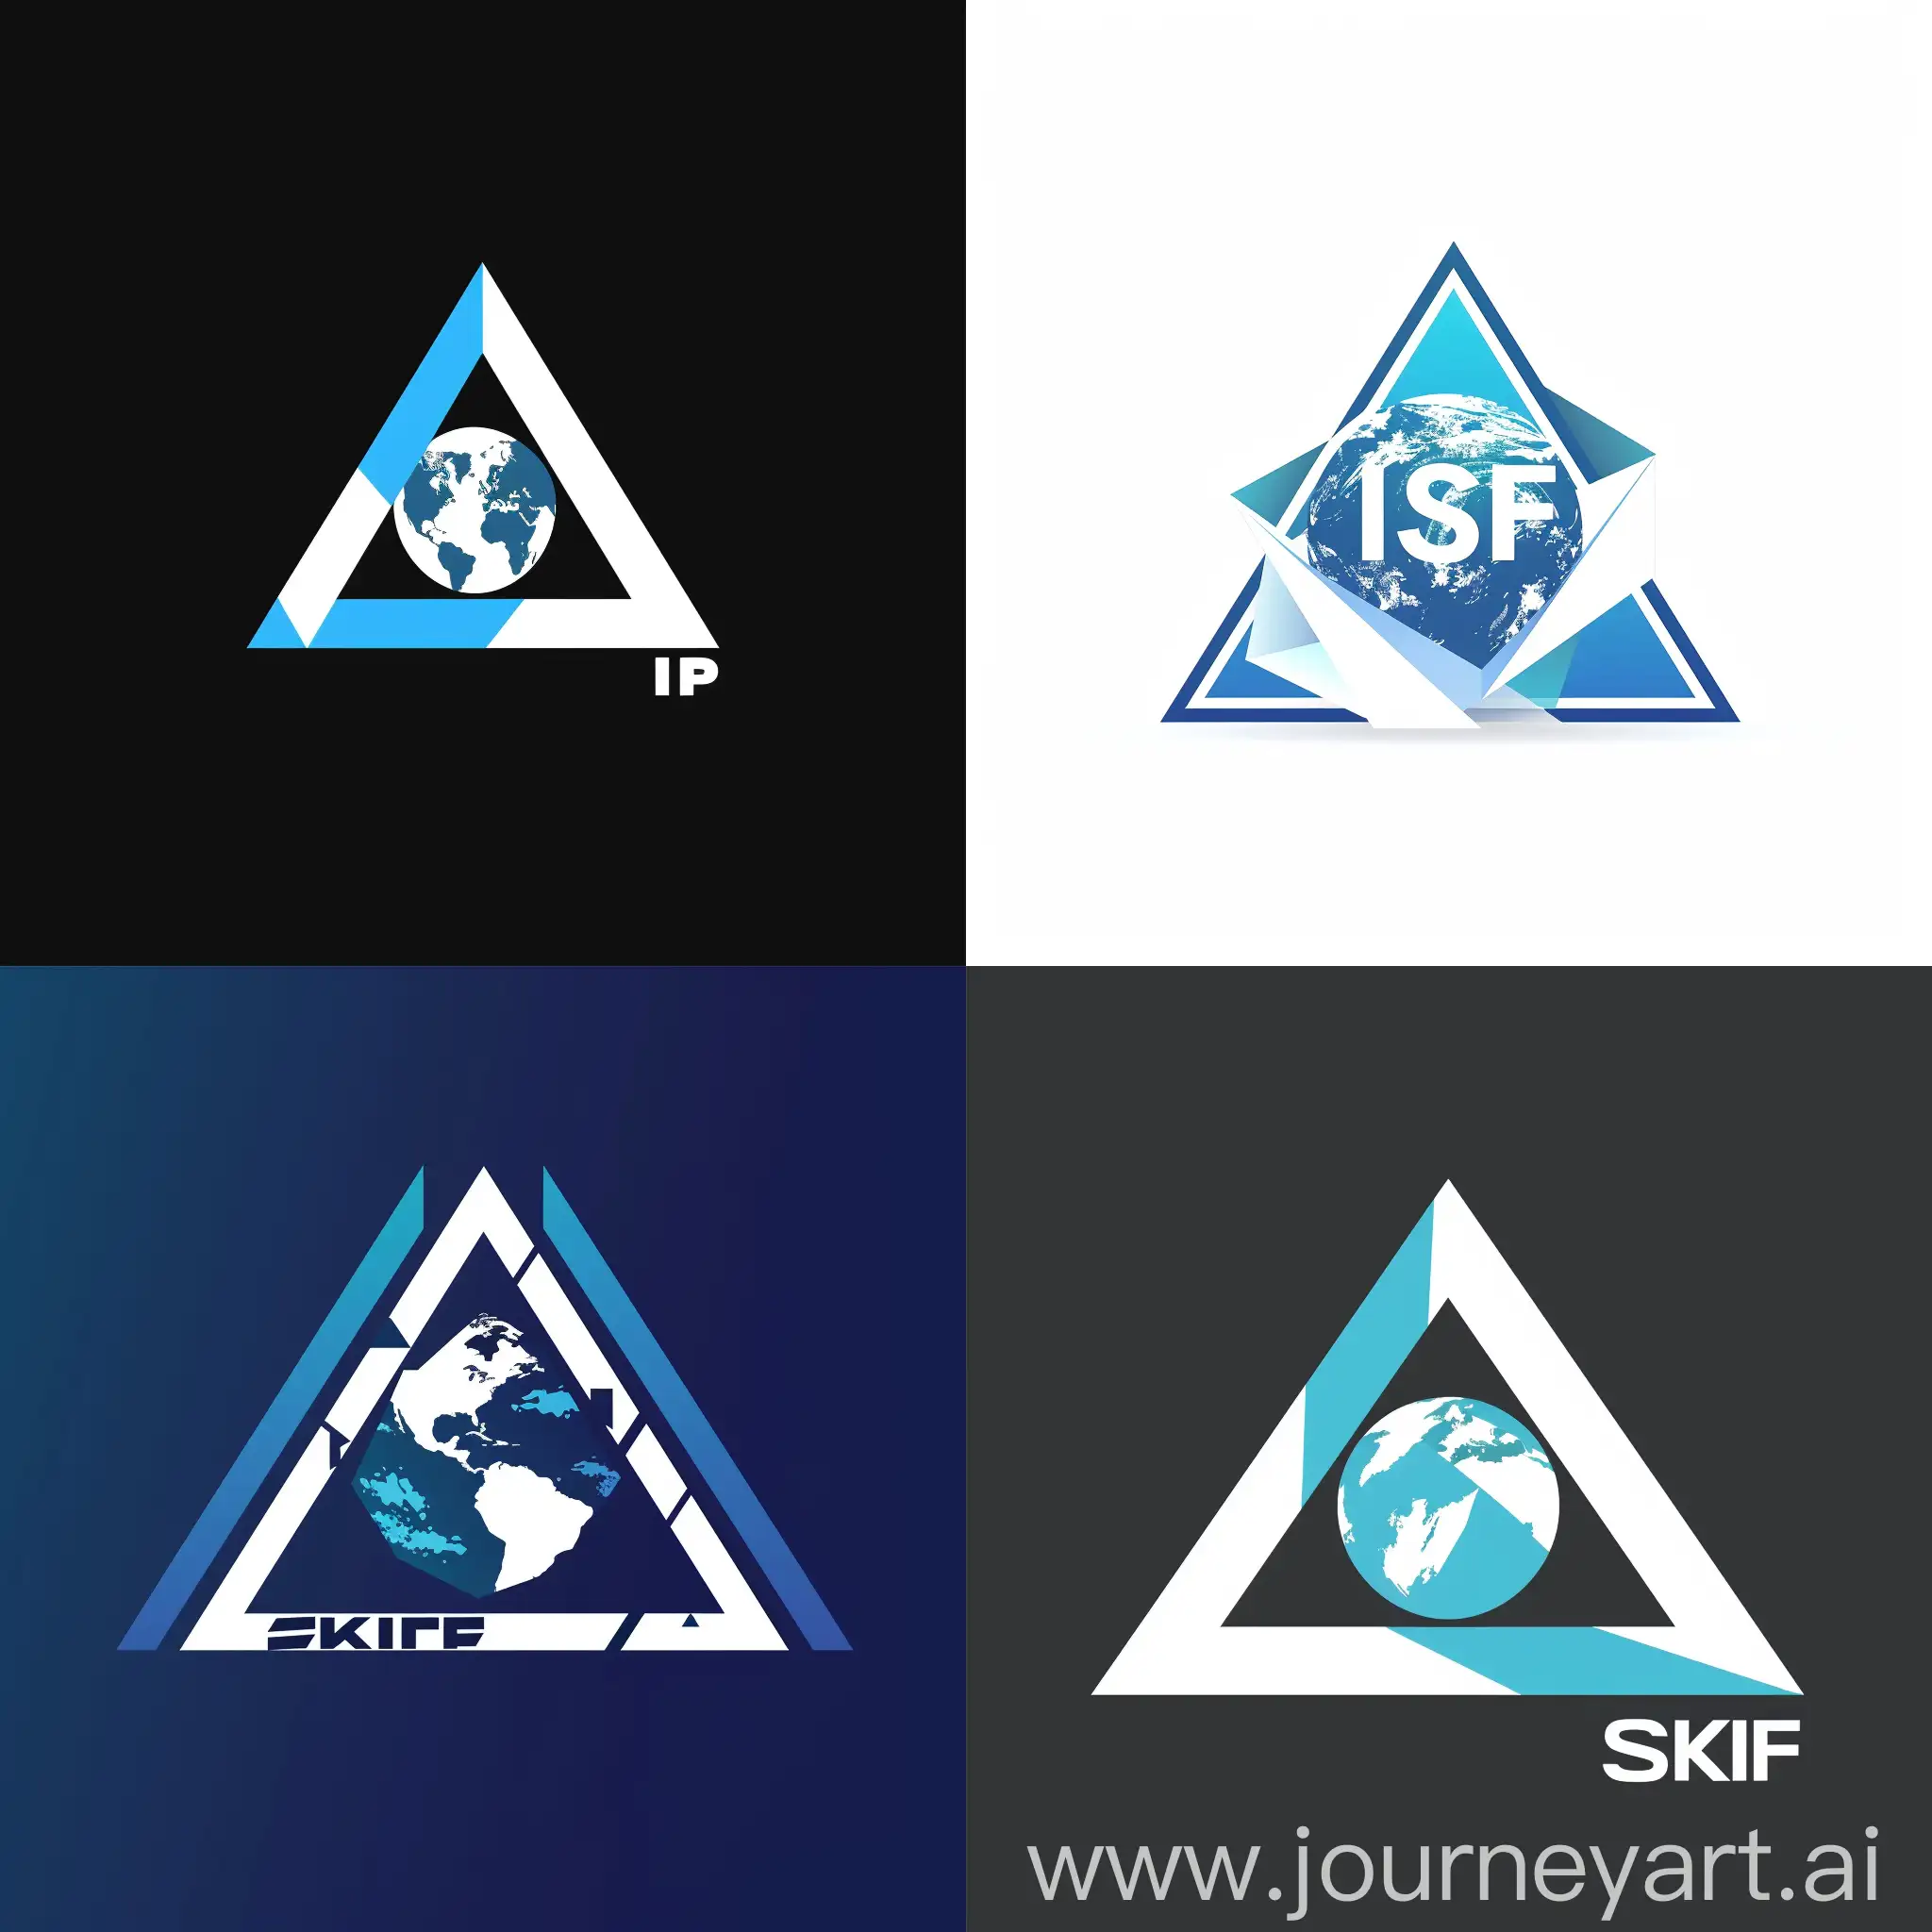 Modern-IT-Company-Logo-Blue-Triangle-with-Globe